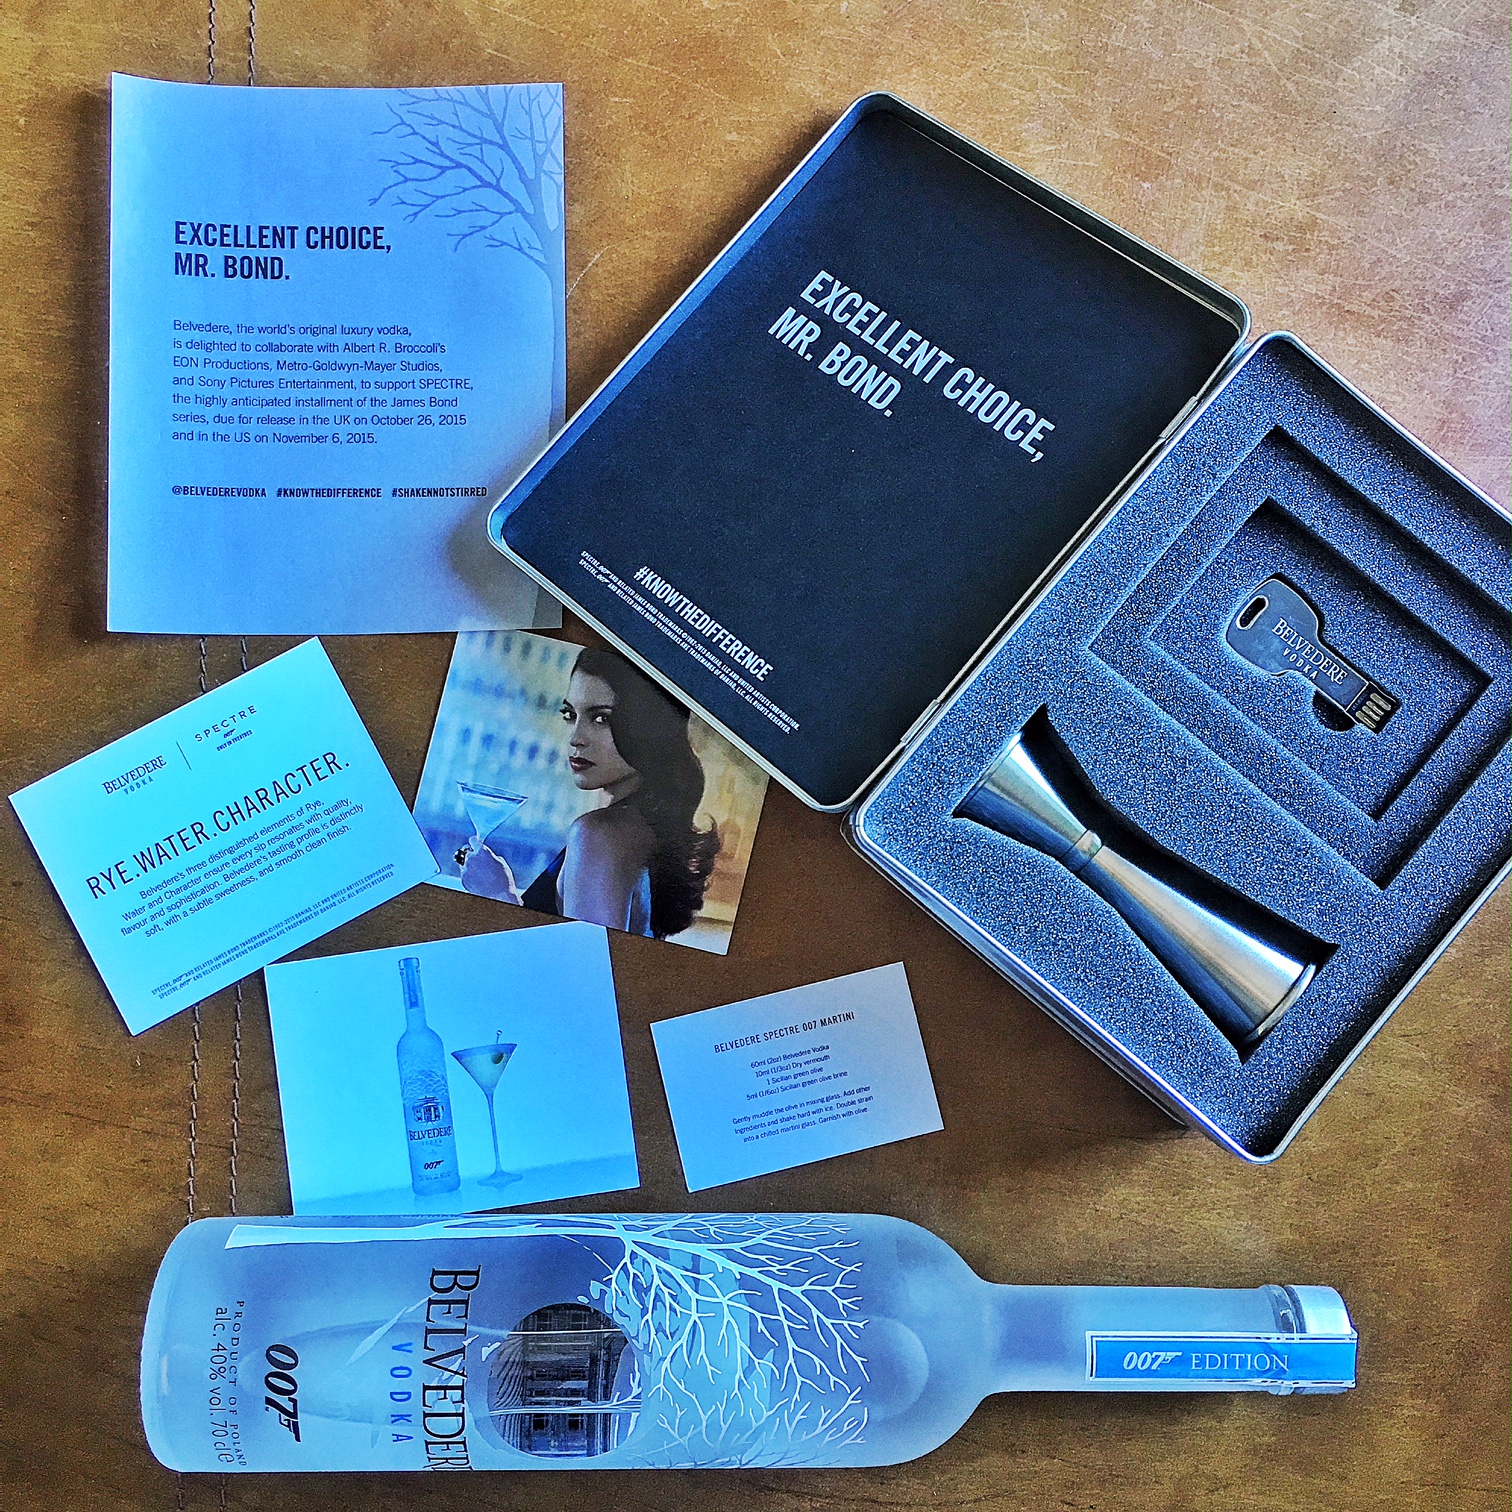 Belvedere 007 SPECTRE Limited Edition Vodka